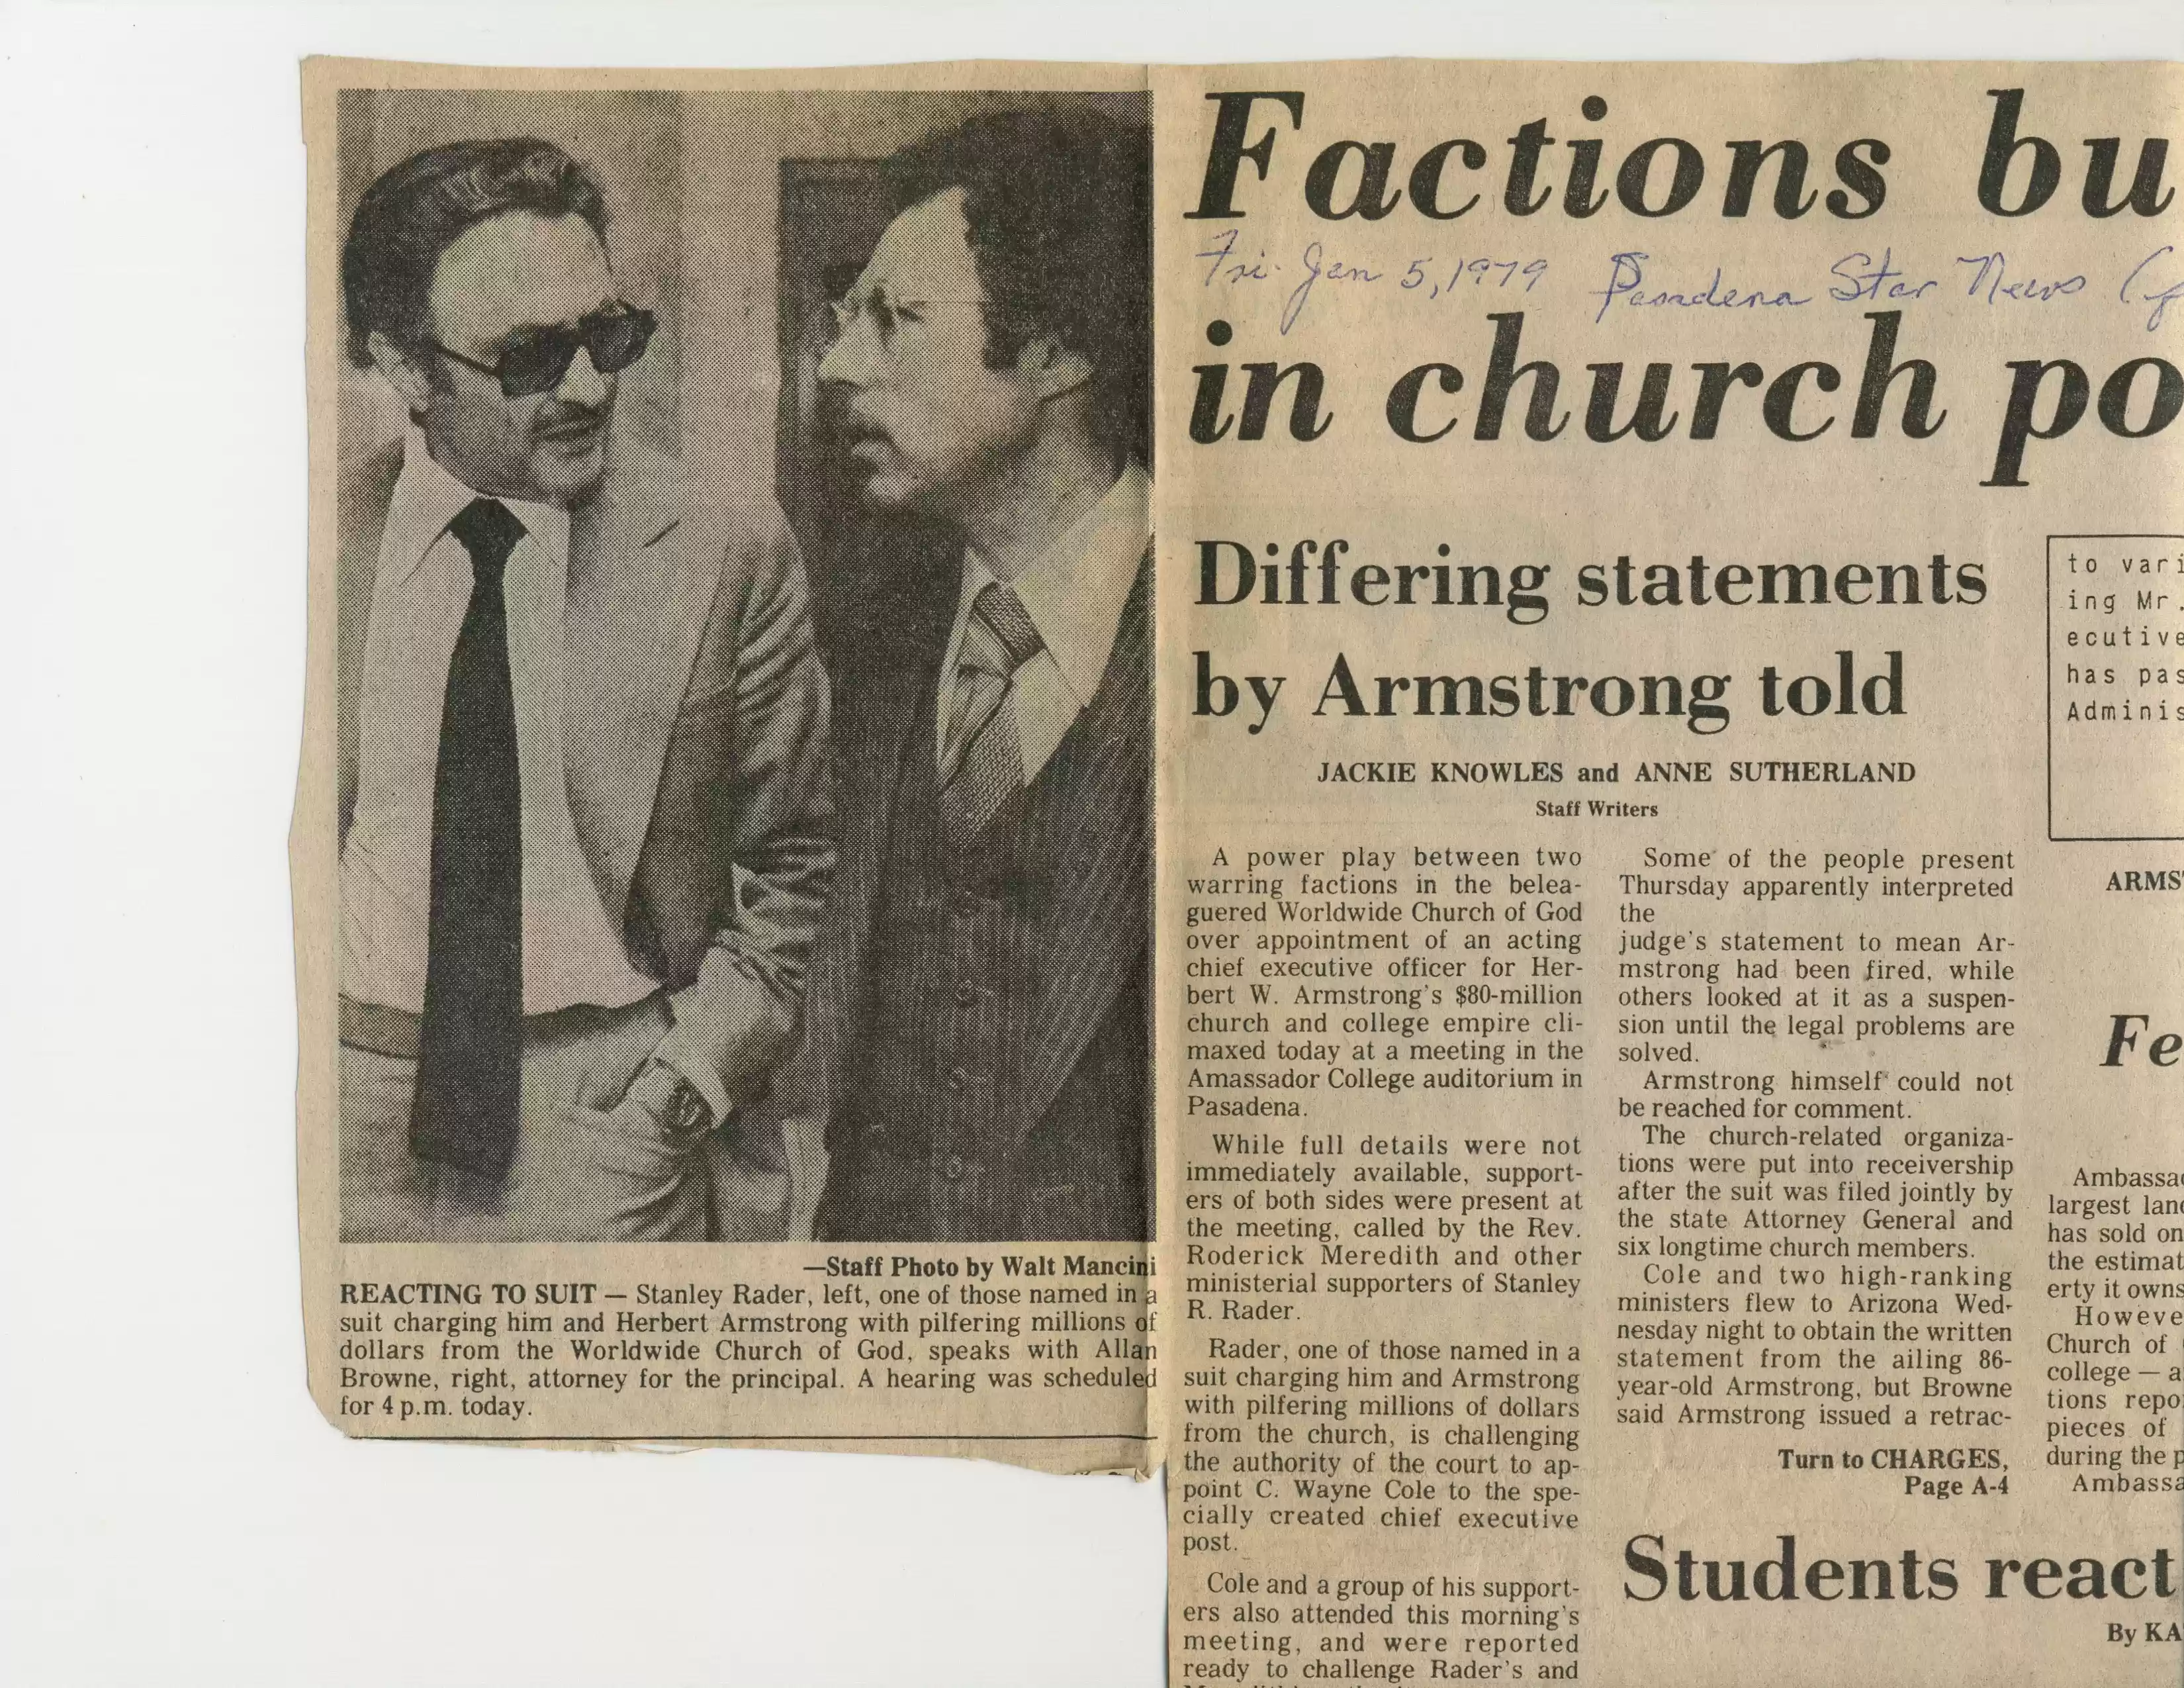 2. Pasadena Star News, 1-5-79